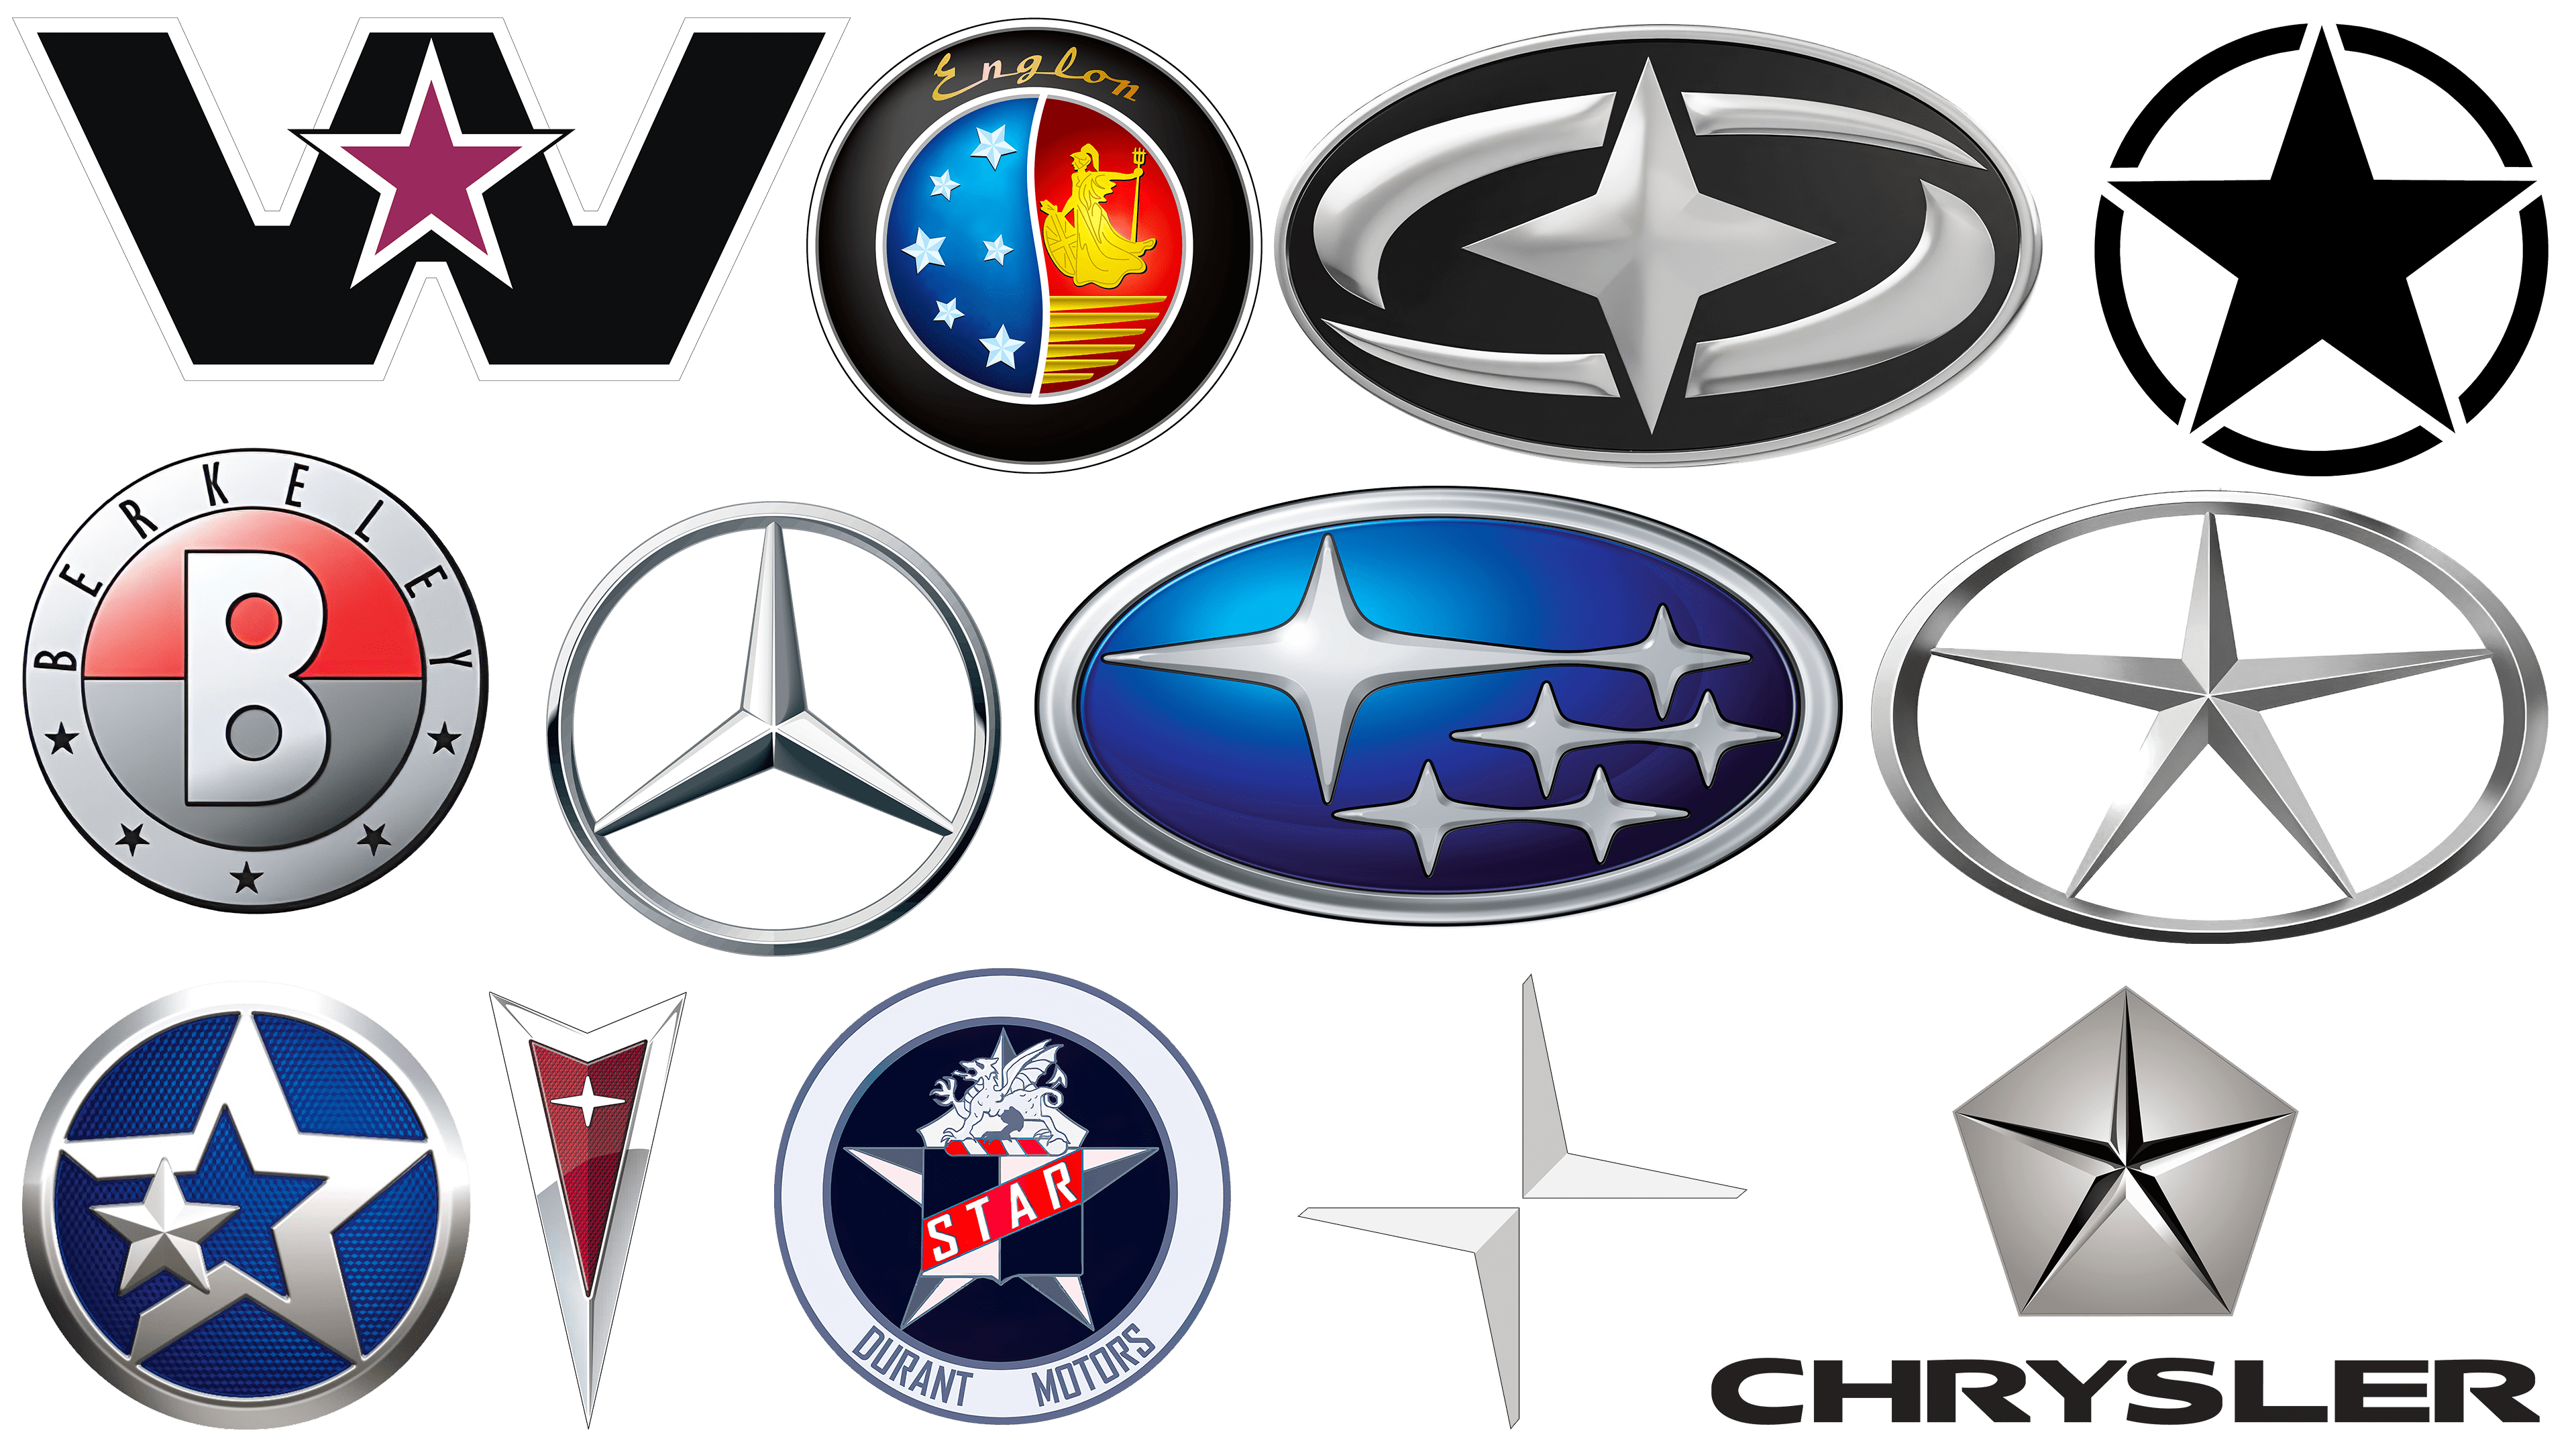 Car Logos With Stars